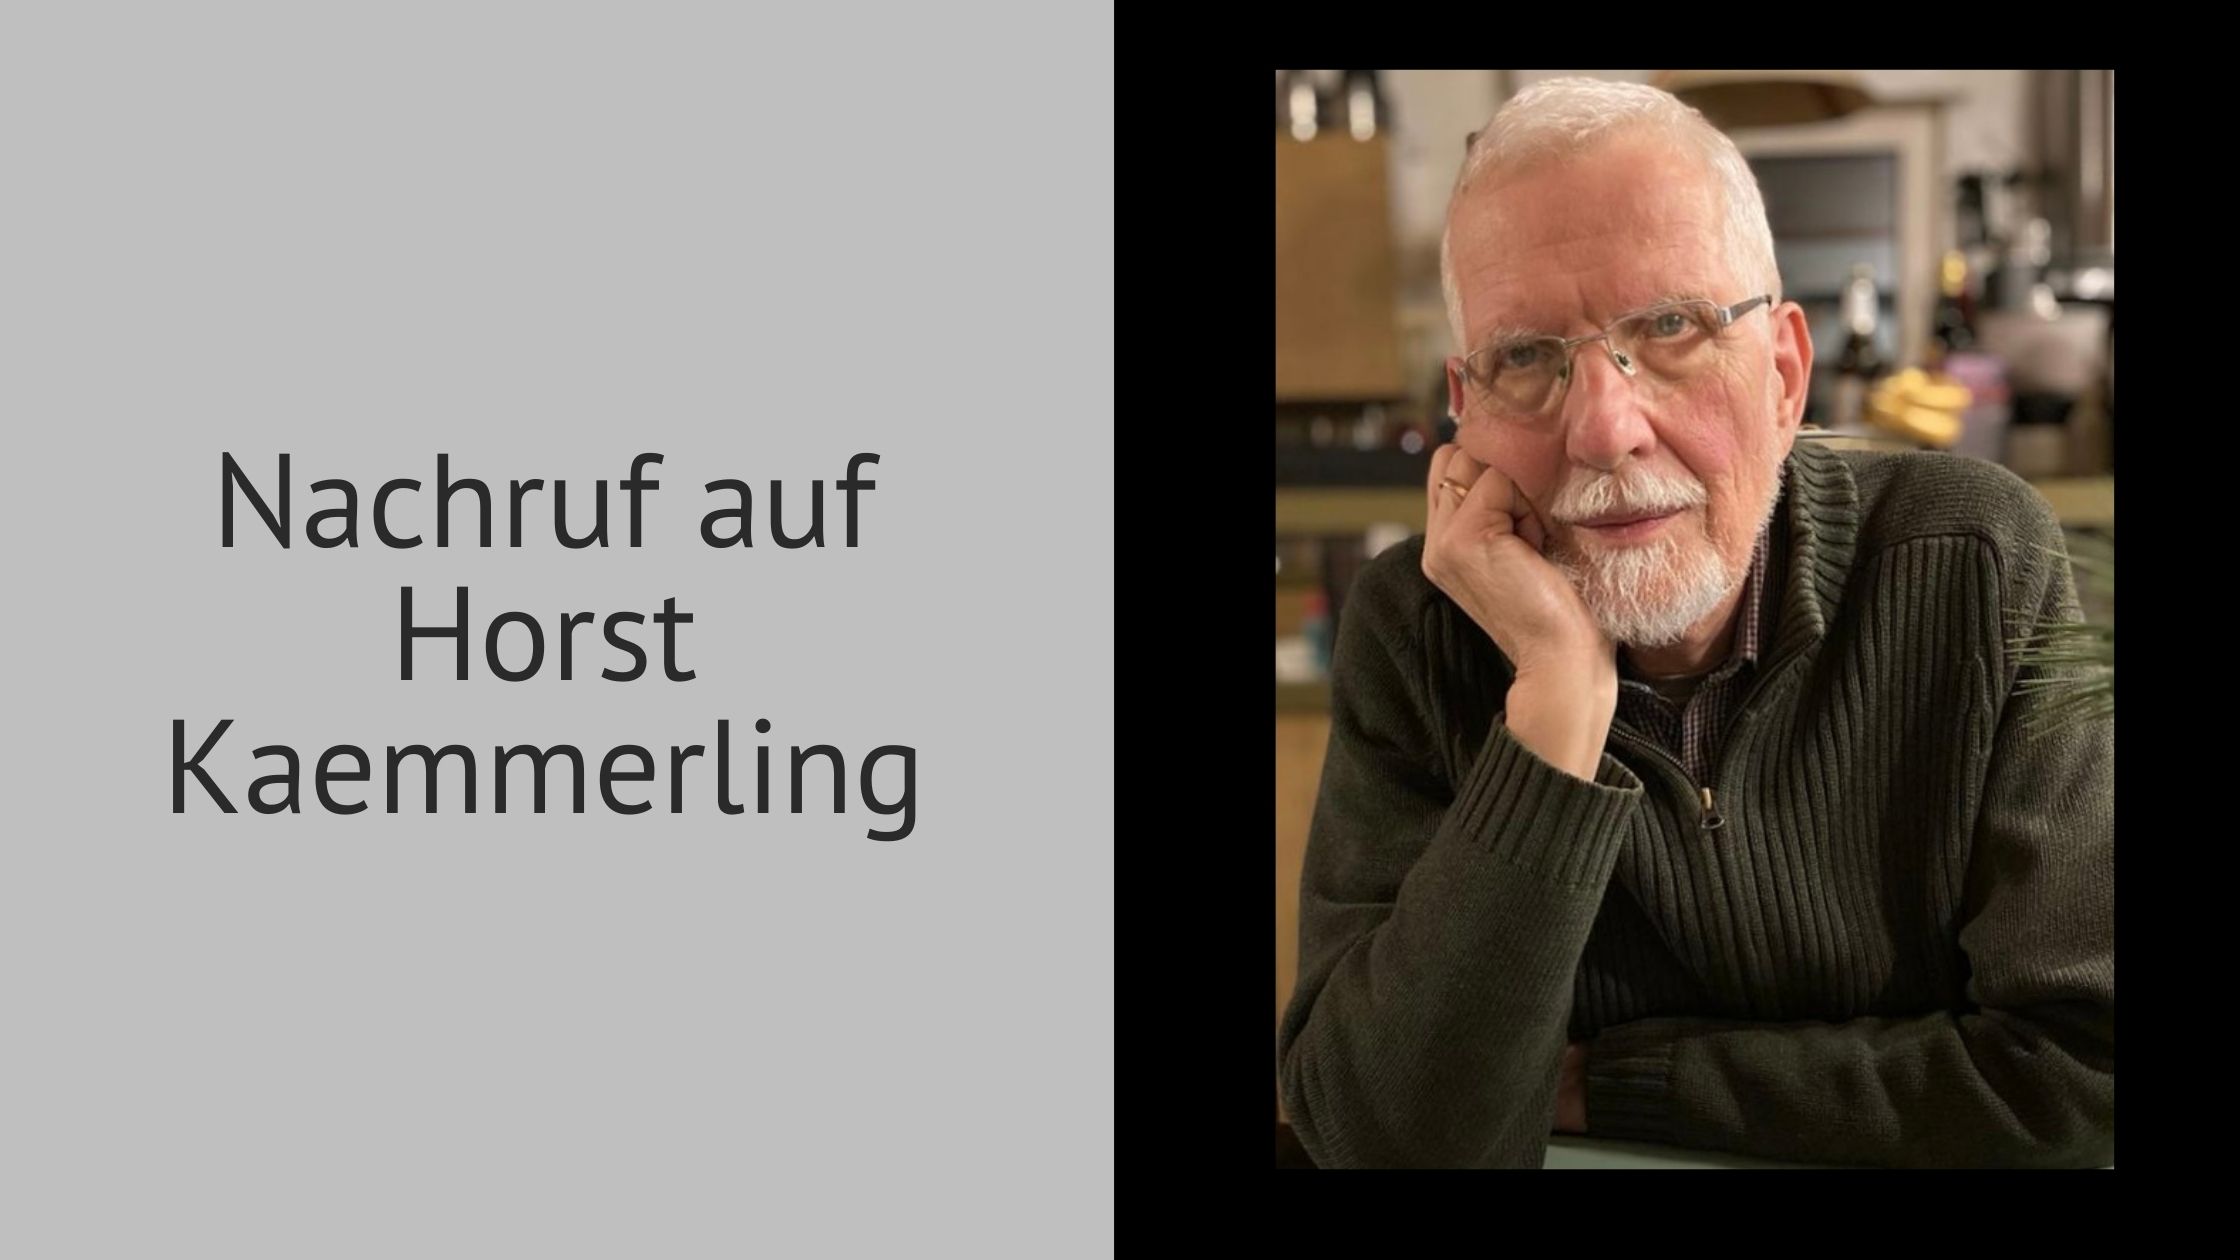 Nachruf auf Horst Kaemmerling